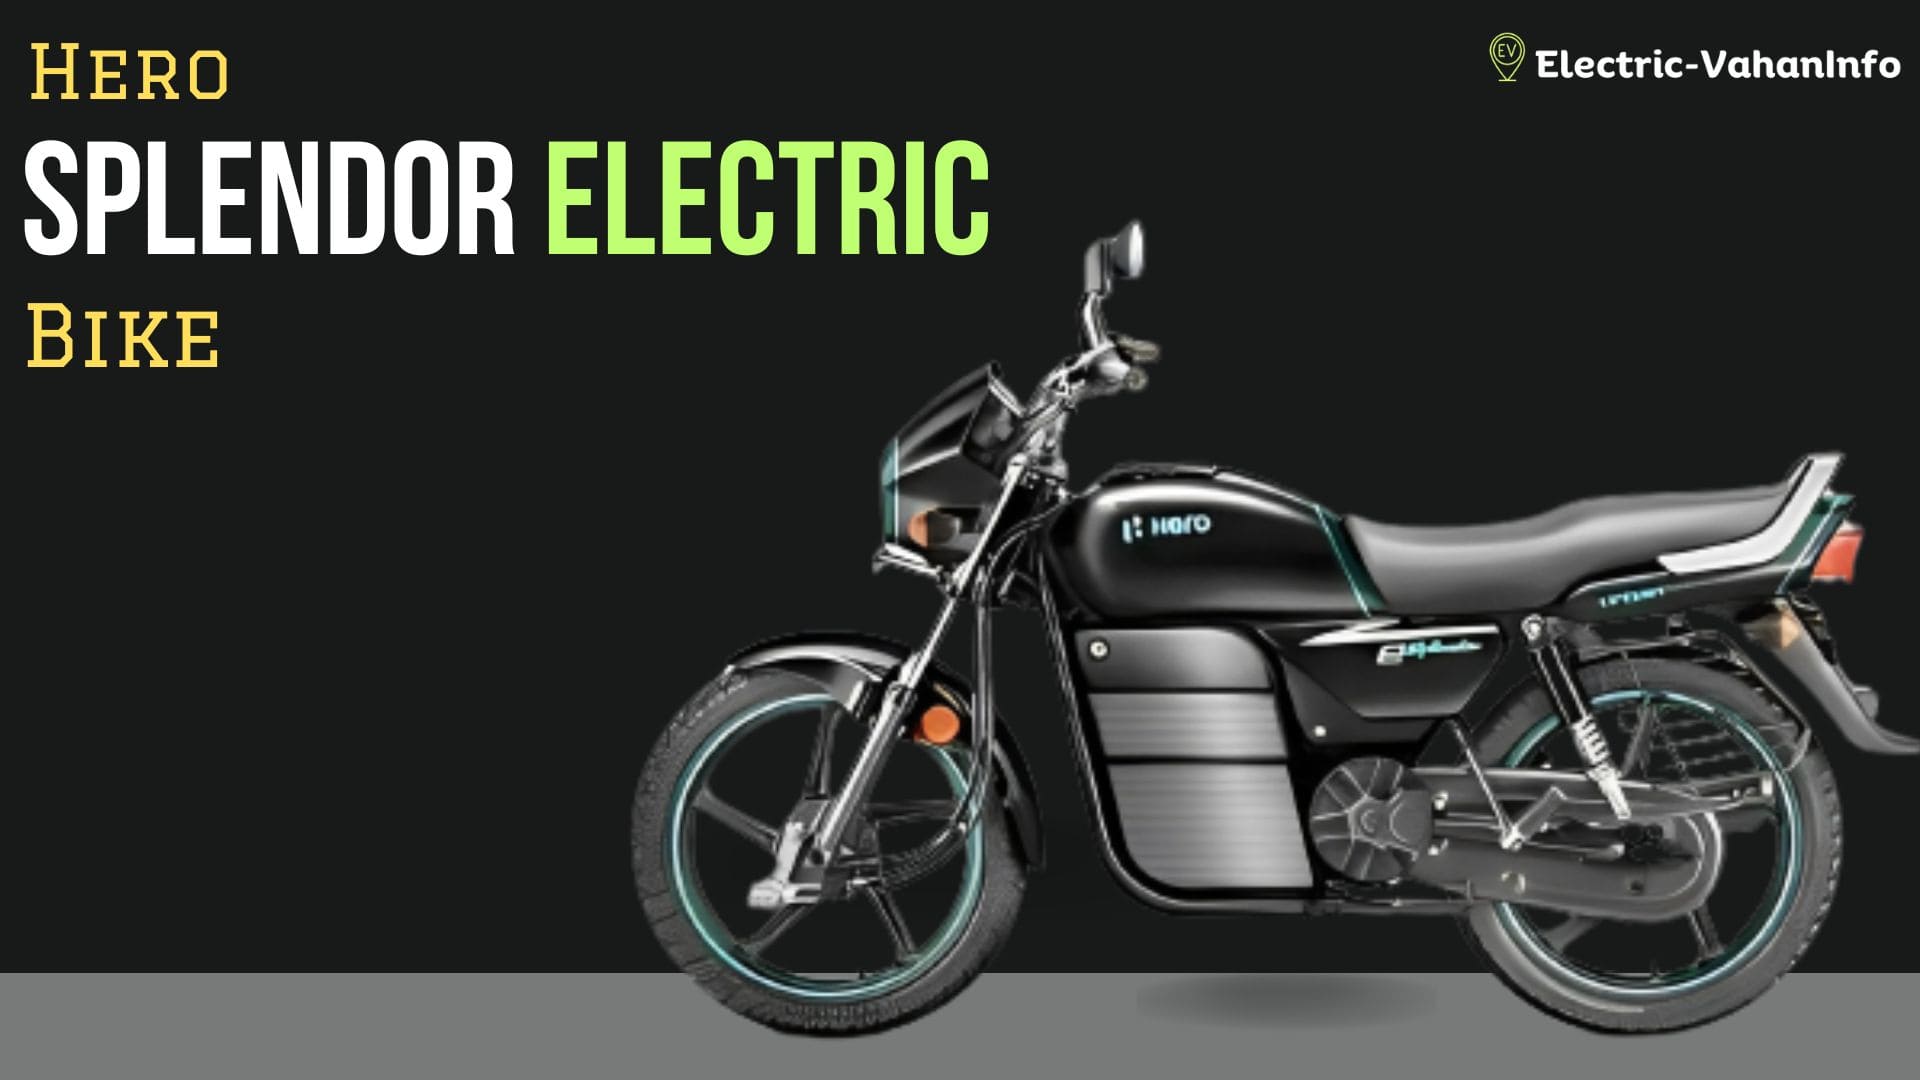 https://electric-vahaninfo.com/hero-splendor-electric-bike-launch/